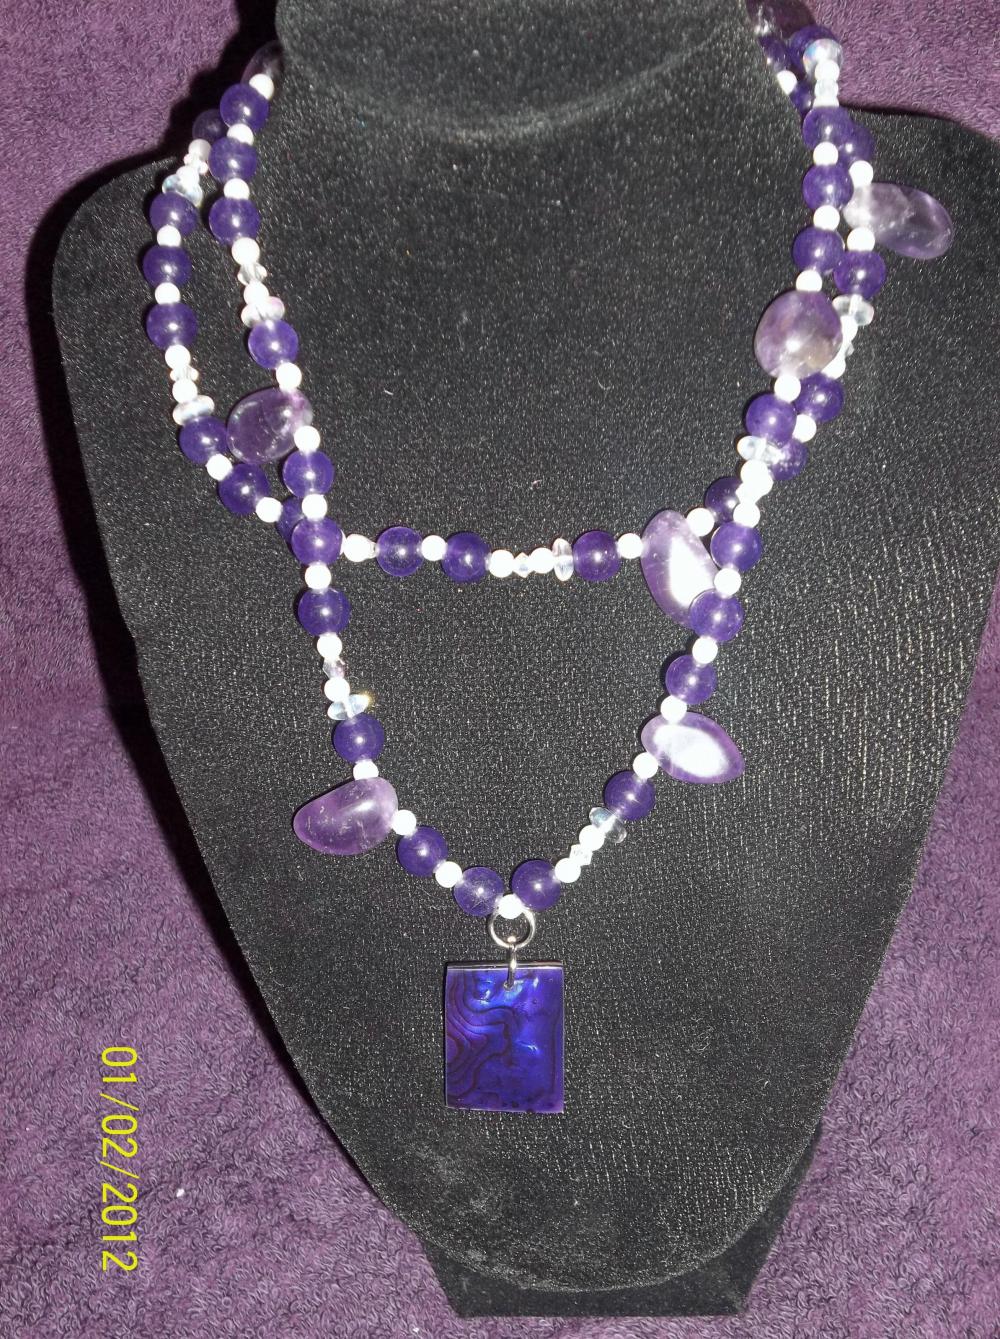 I Love Purple! Necklace